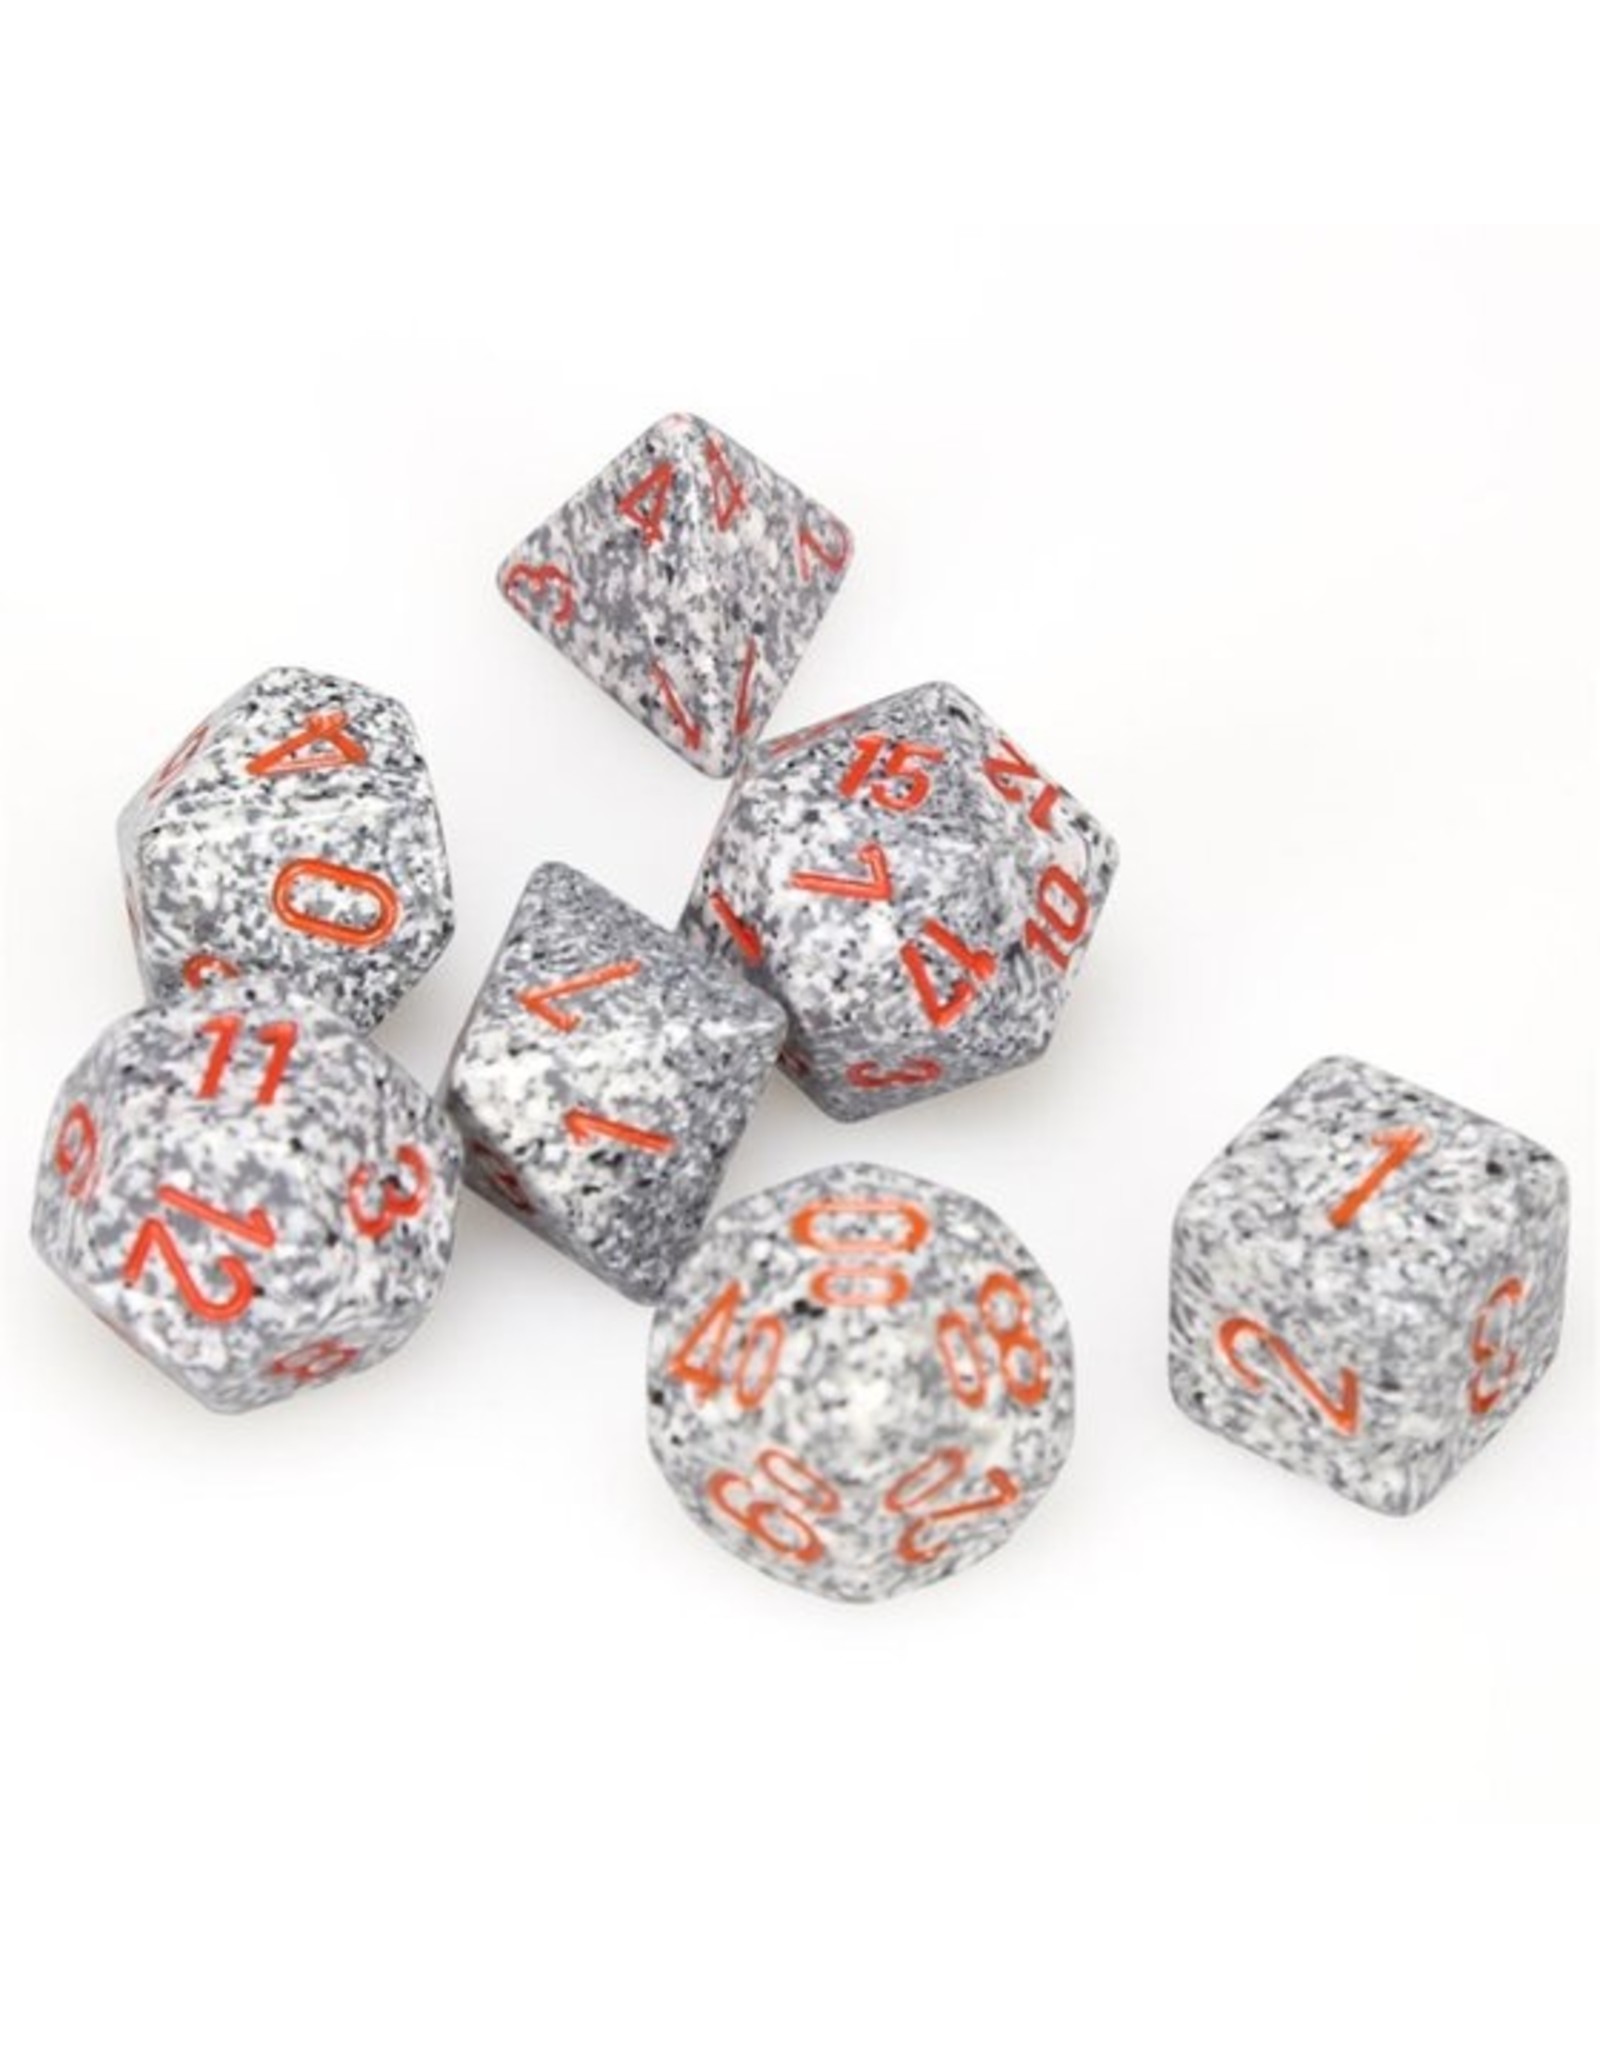 Chessex CHX 25320 7Ct Speckled Poly Granite Dice Set